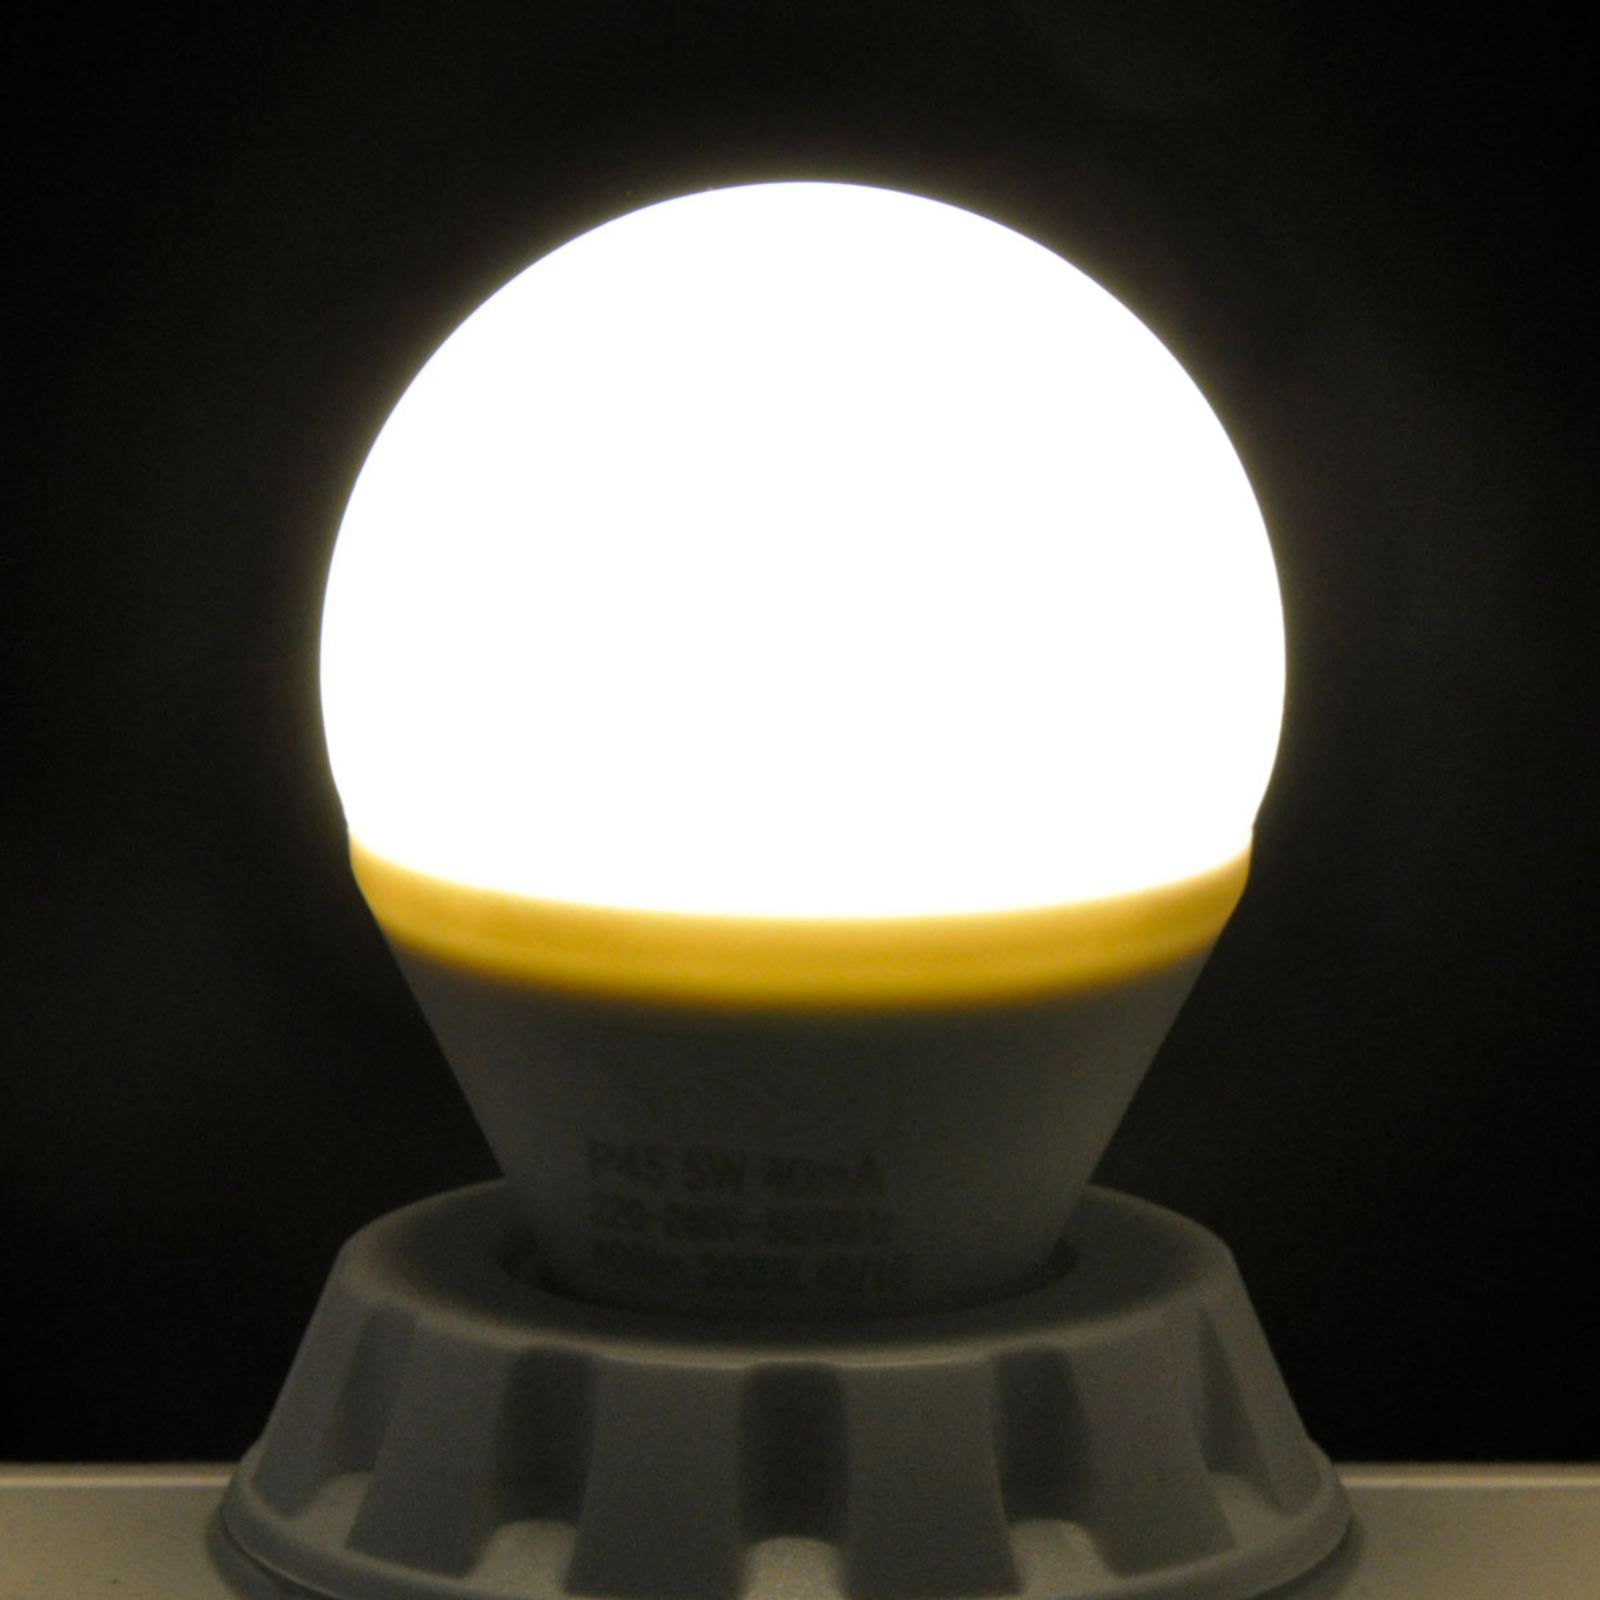 LED druppellamp E14 5W, warmwit, easydim